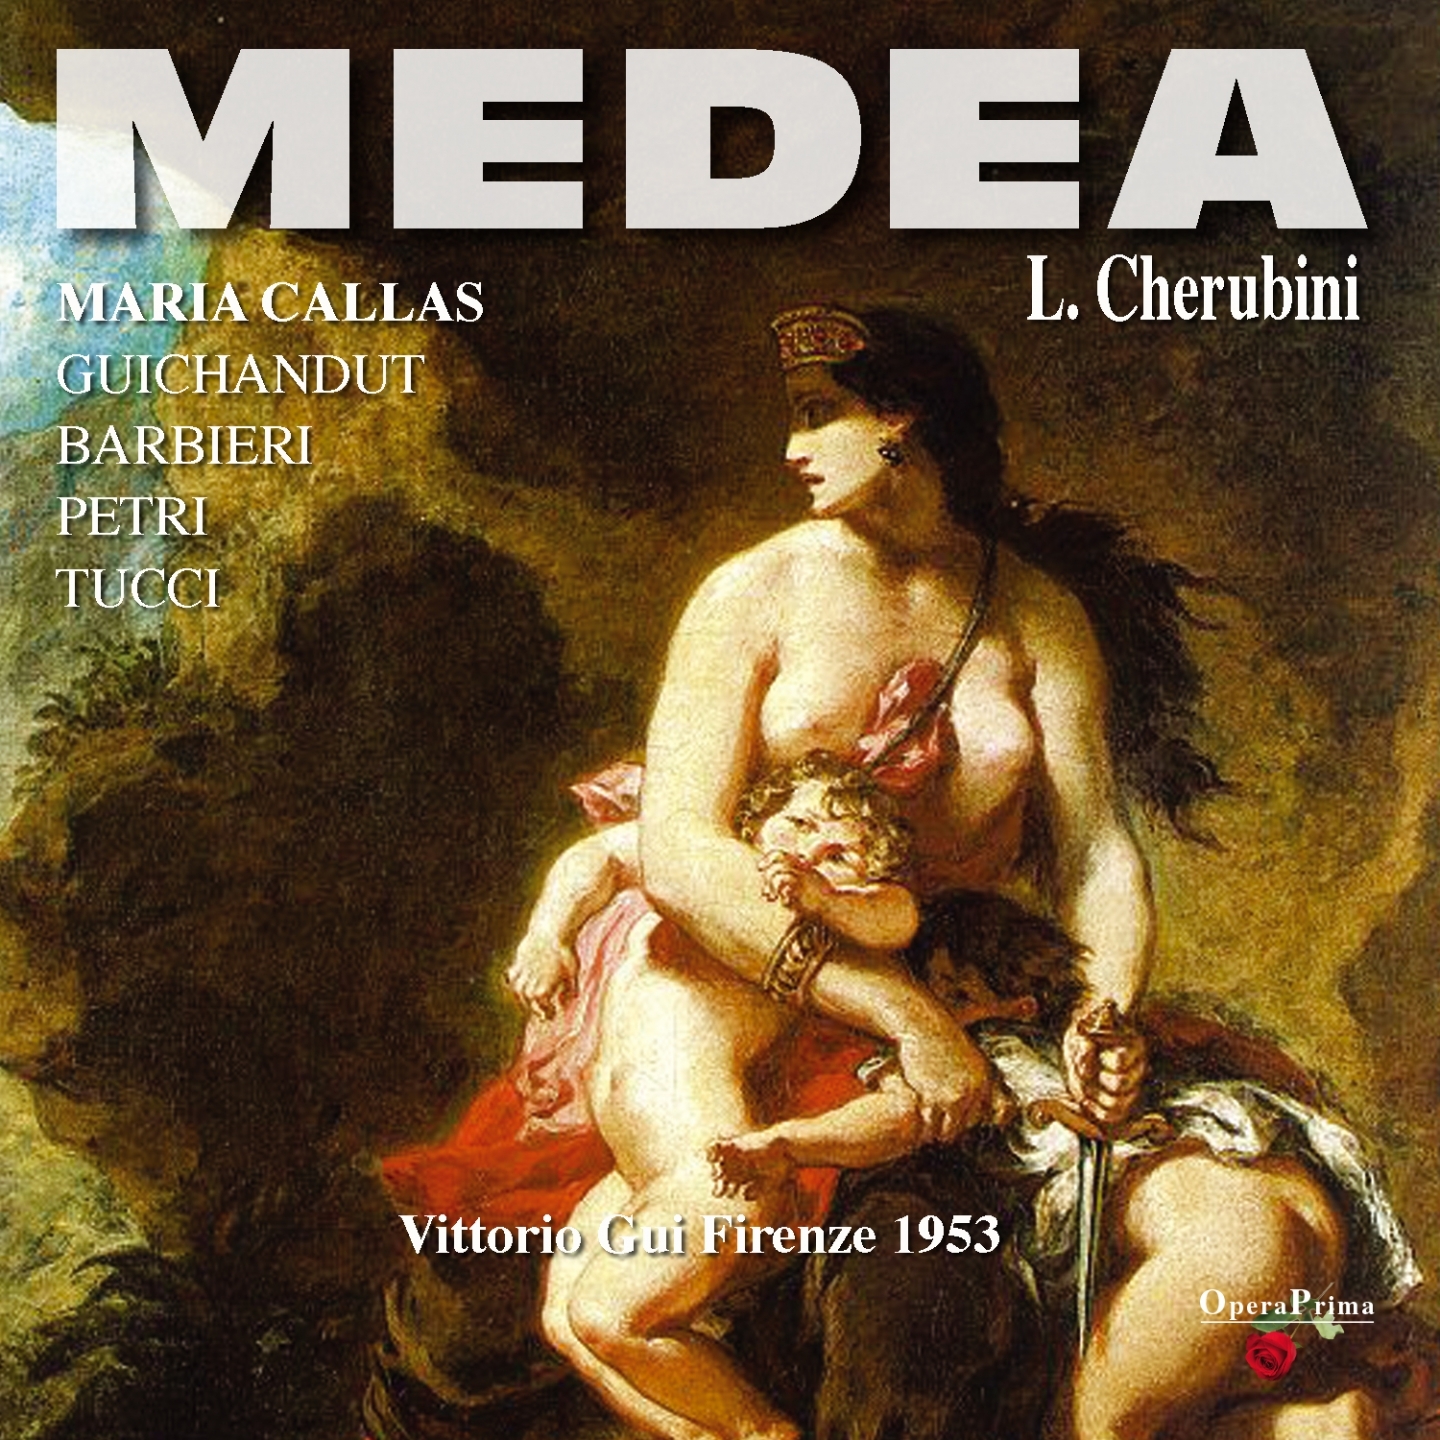 Medea : Act II - "Medea! O Medea!"